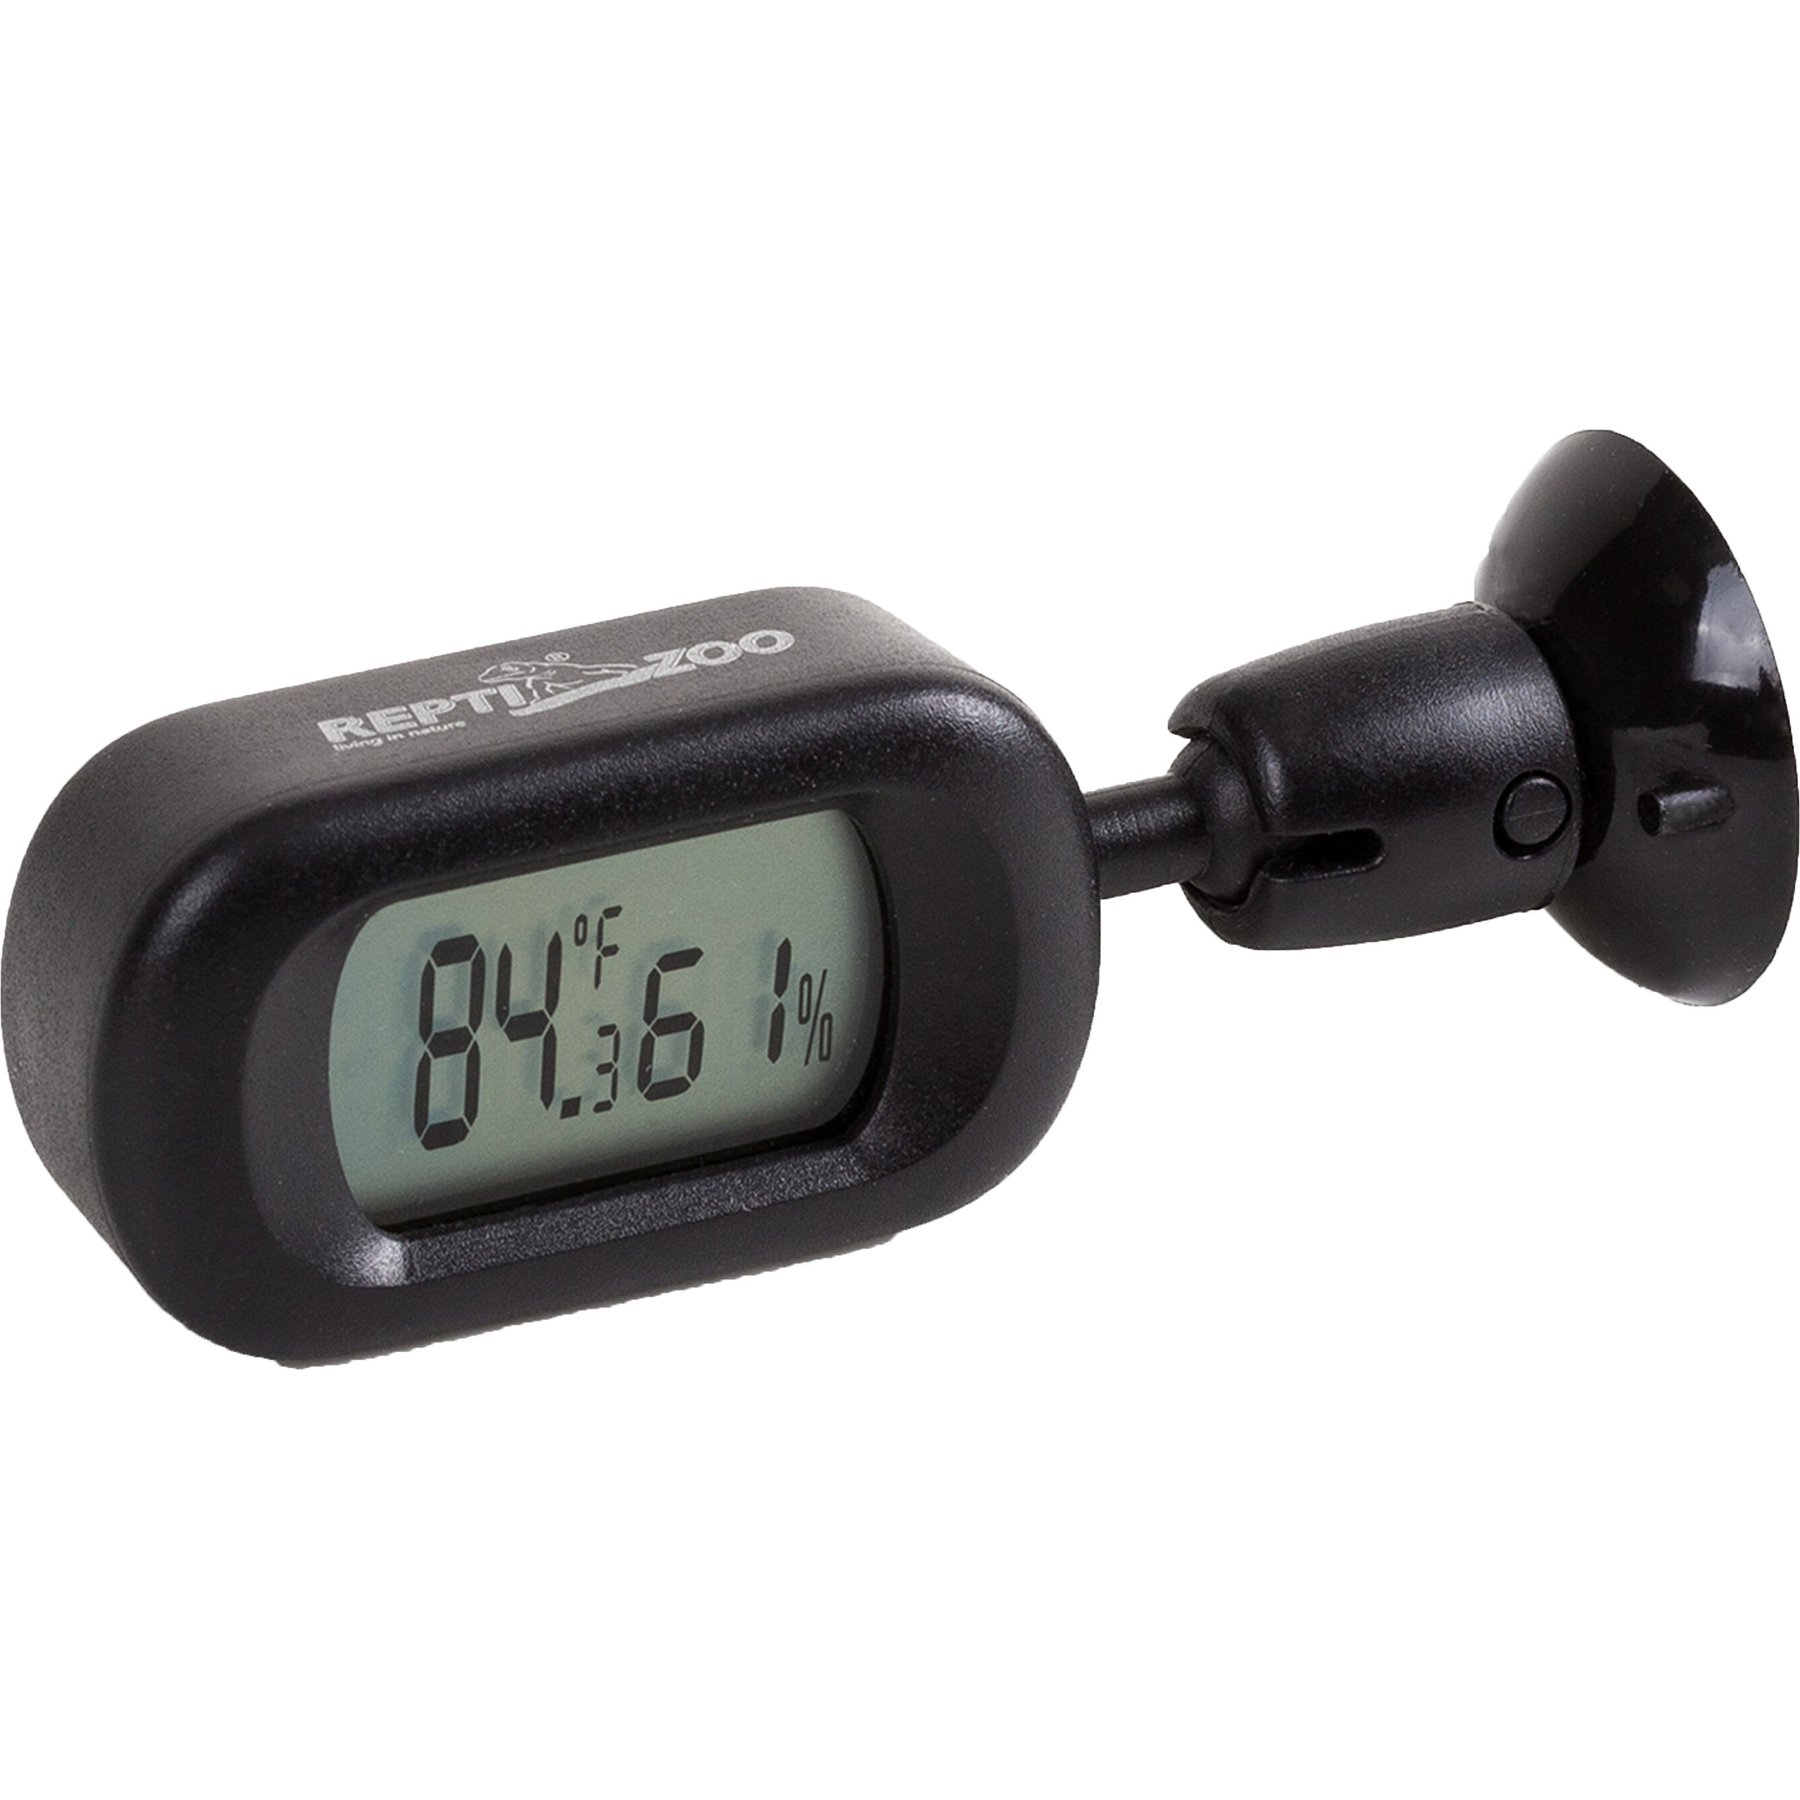 Reptile Thermometer Terrarium Temperature Humidity Gauge Monitor Dial  Hygrometer